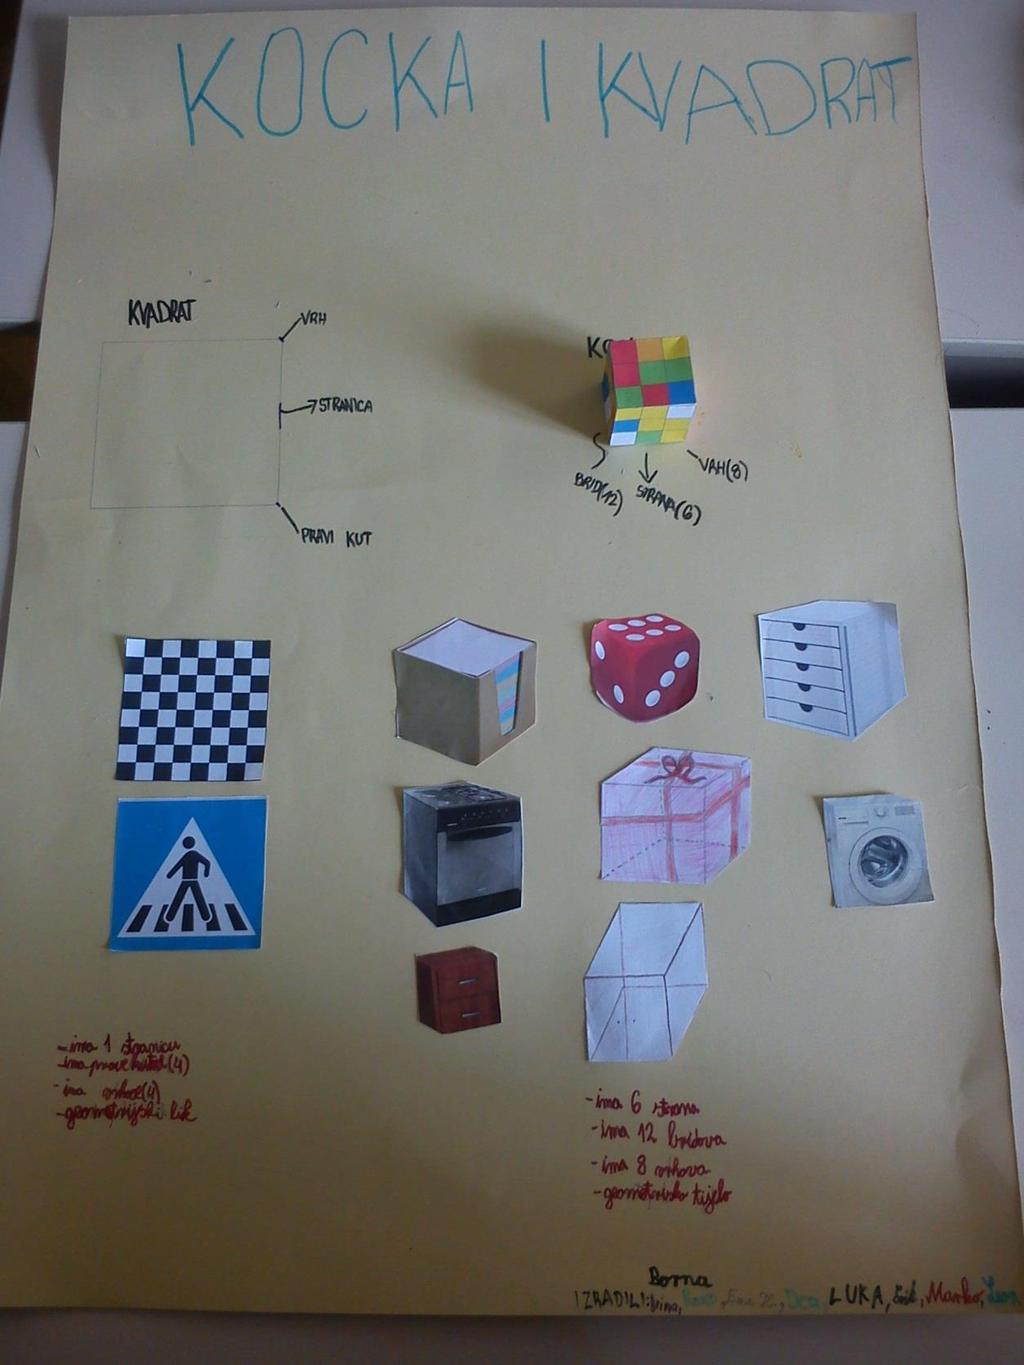 Prilog 2: Plakat Kocka i kvadrat